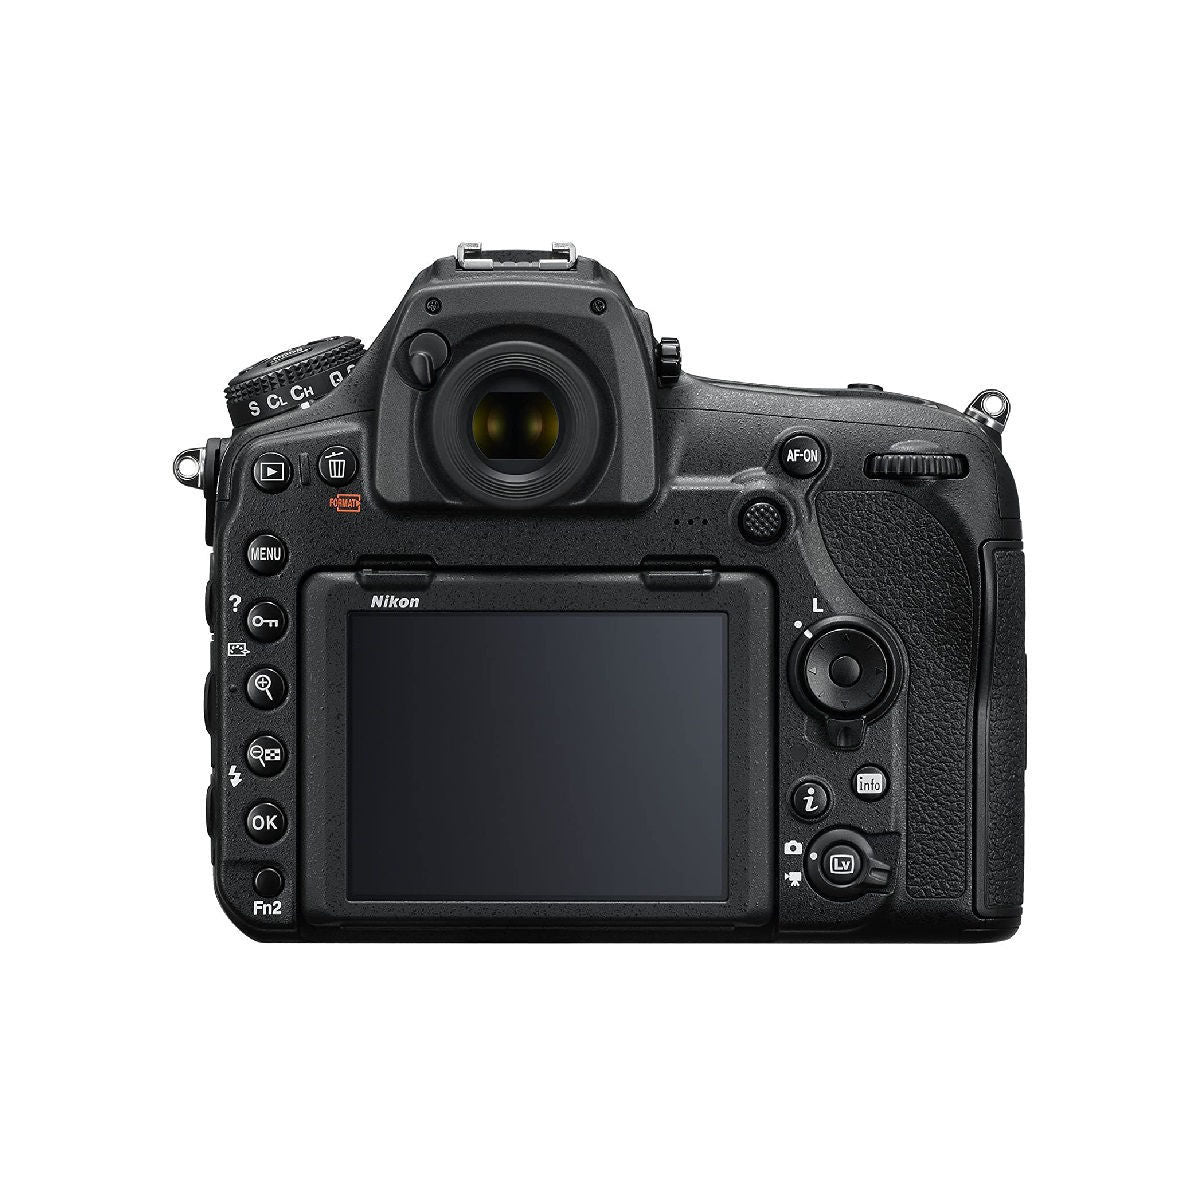 केवल Nikon D850 45.7MP DSLR कैमरा बॉडी